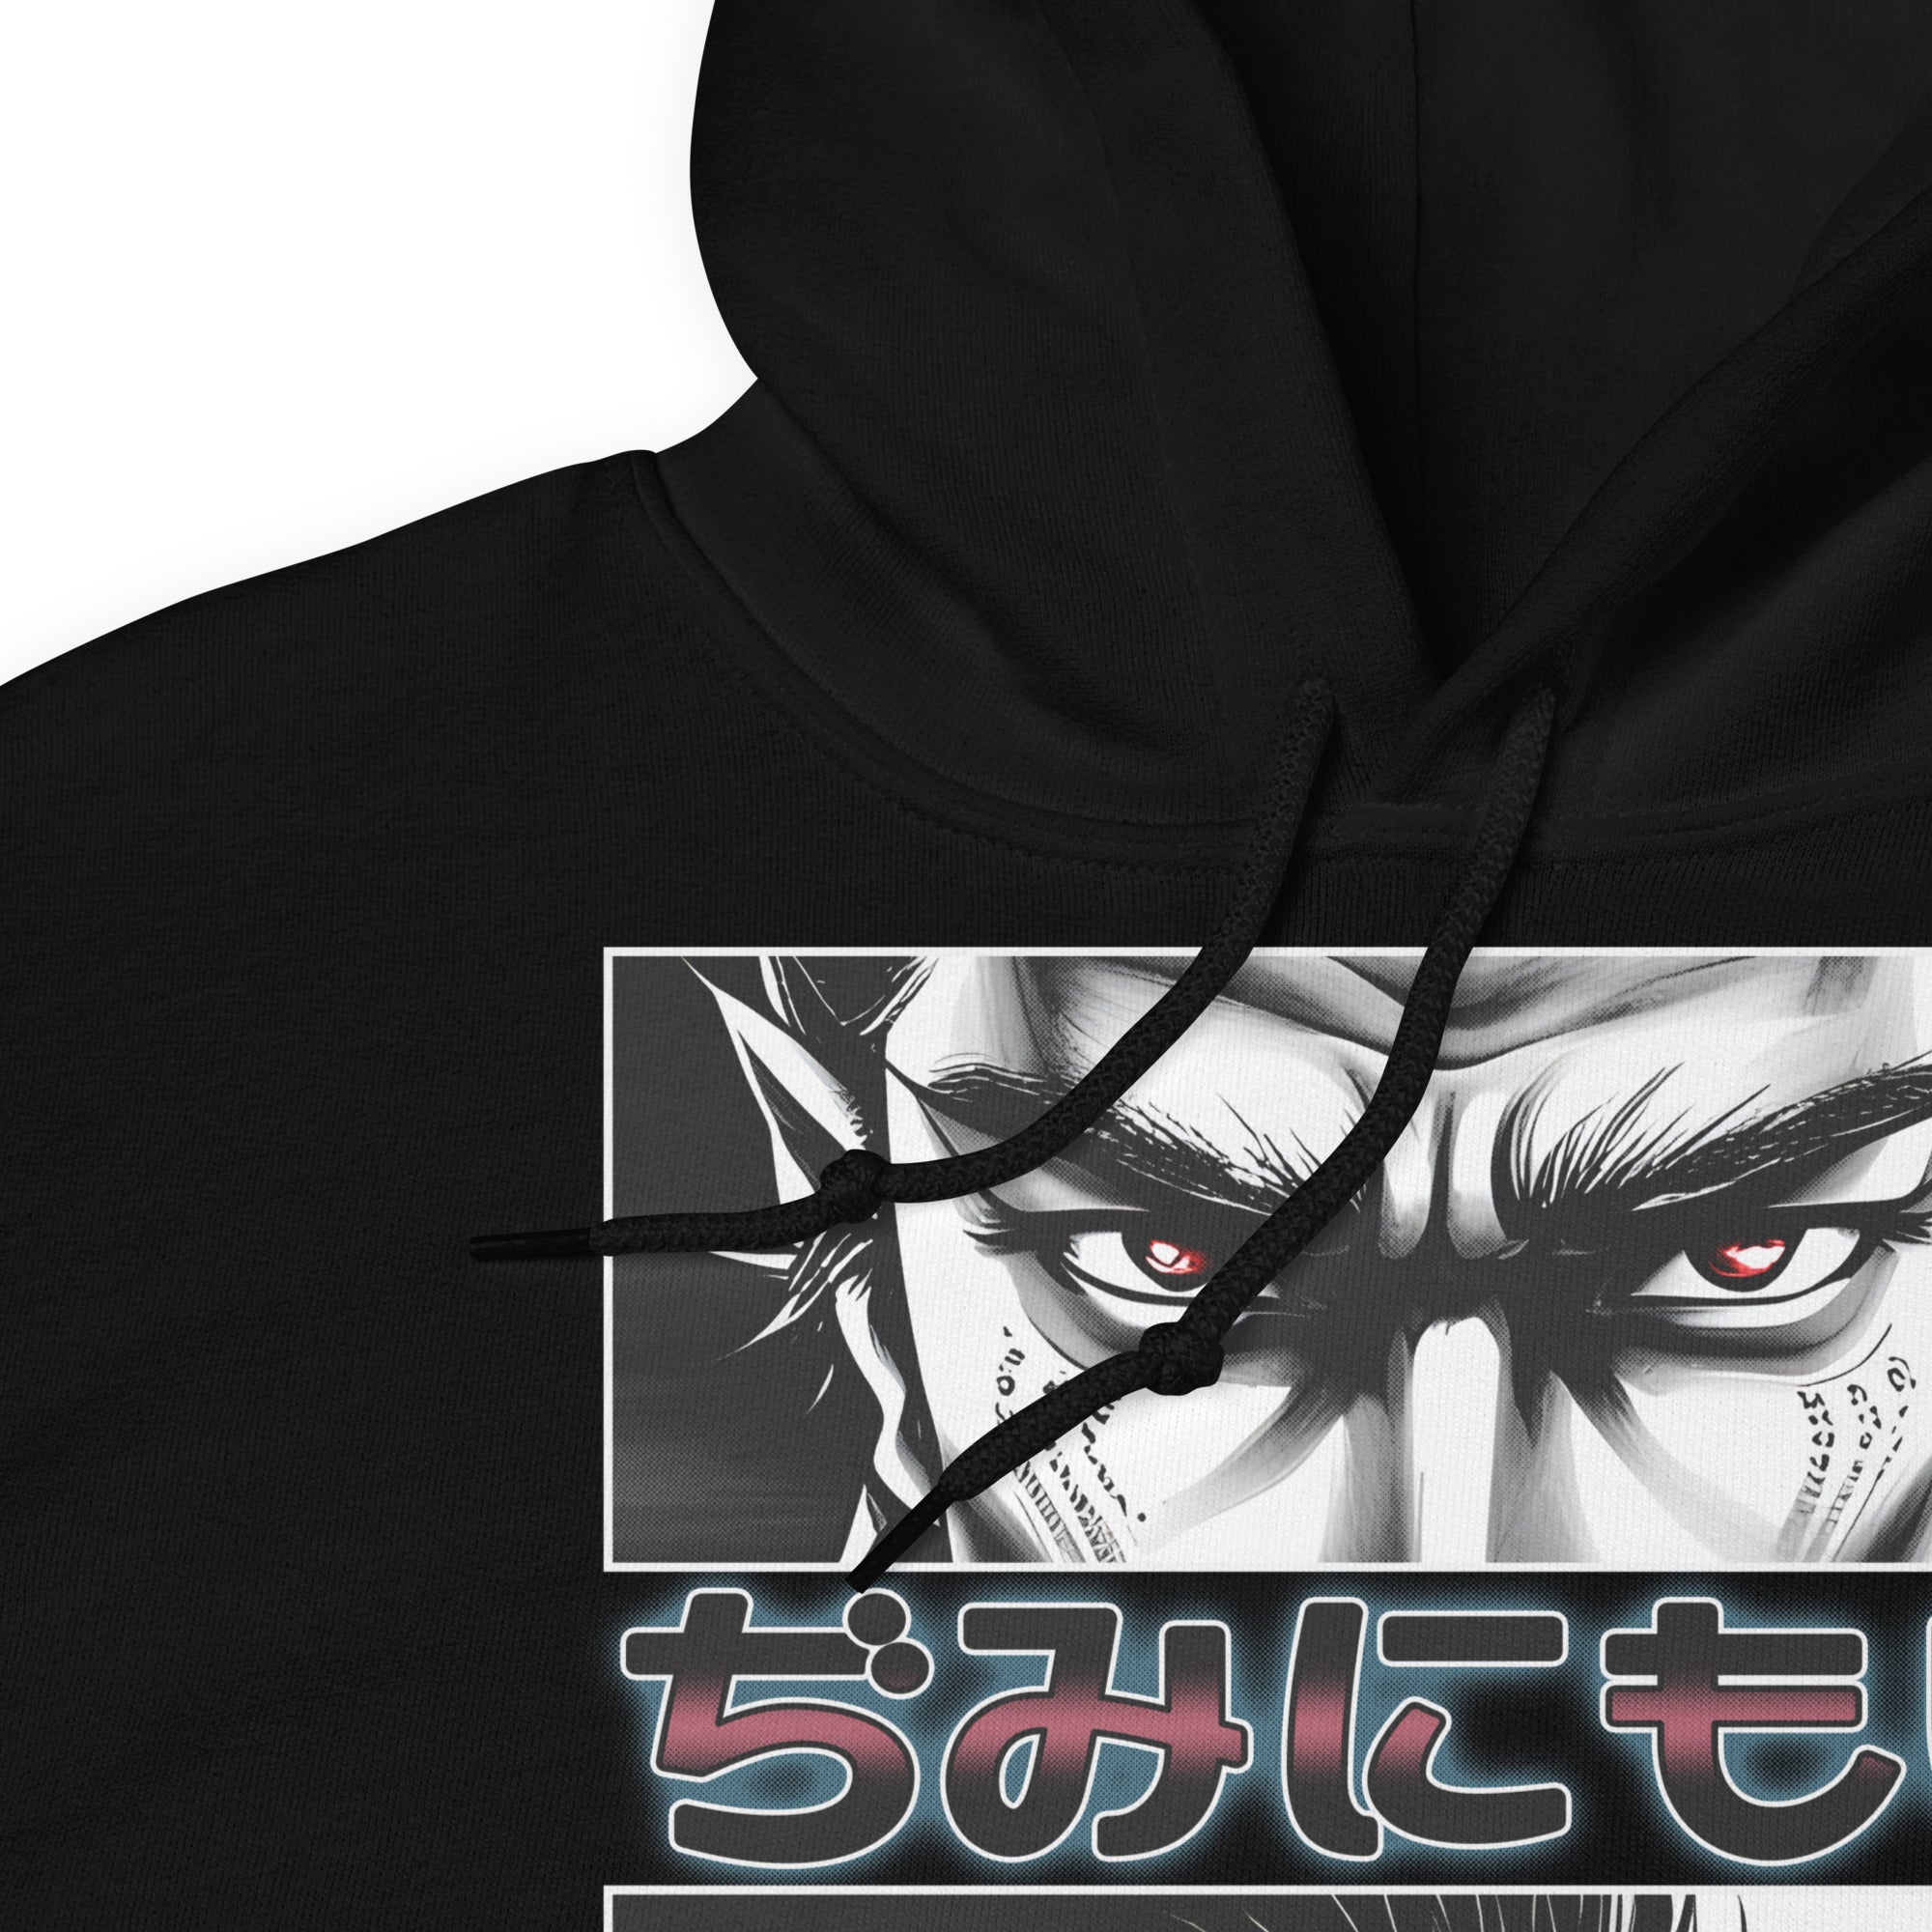 Anime Eyes Japanese Letters Samurai Manga Design Pullover Hoodie Sweatshirt